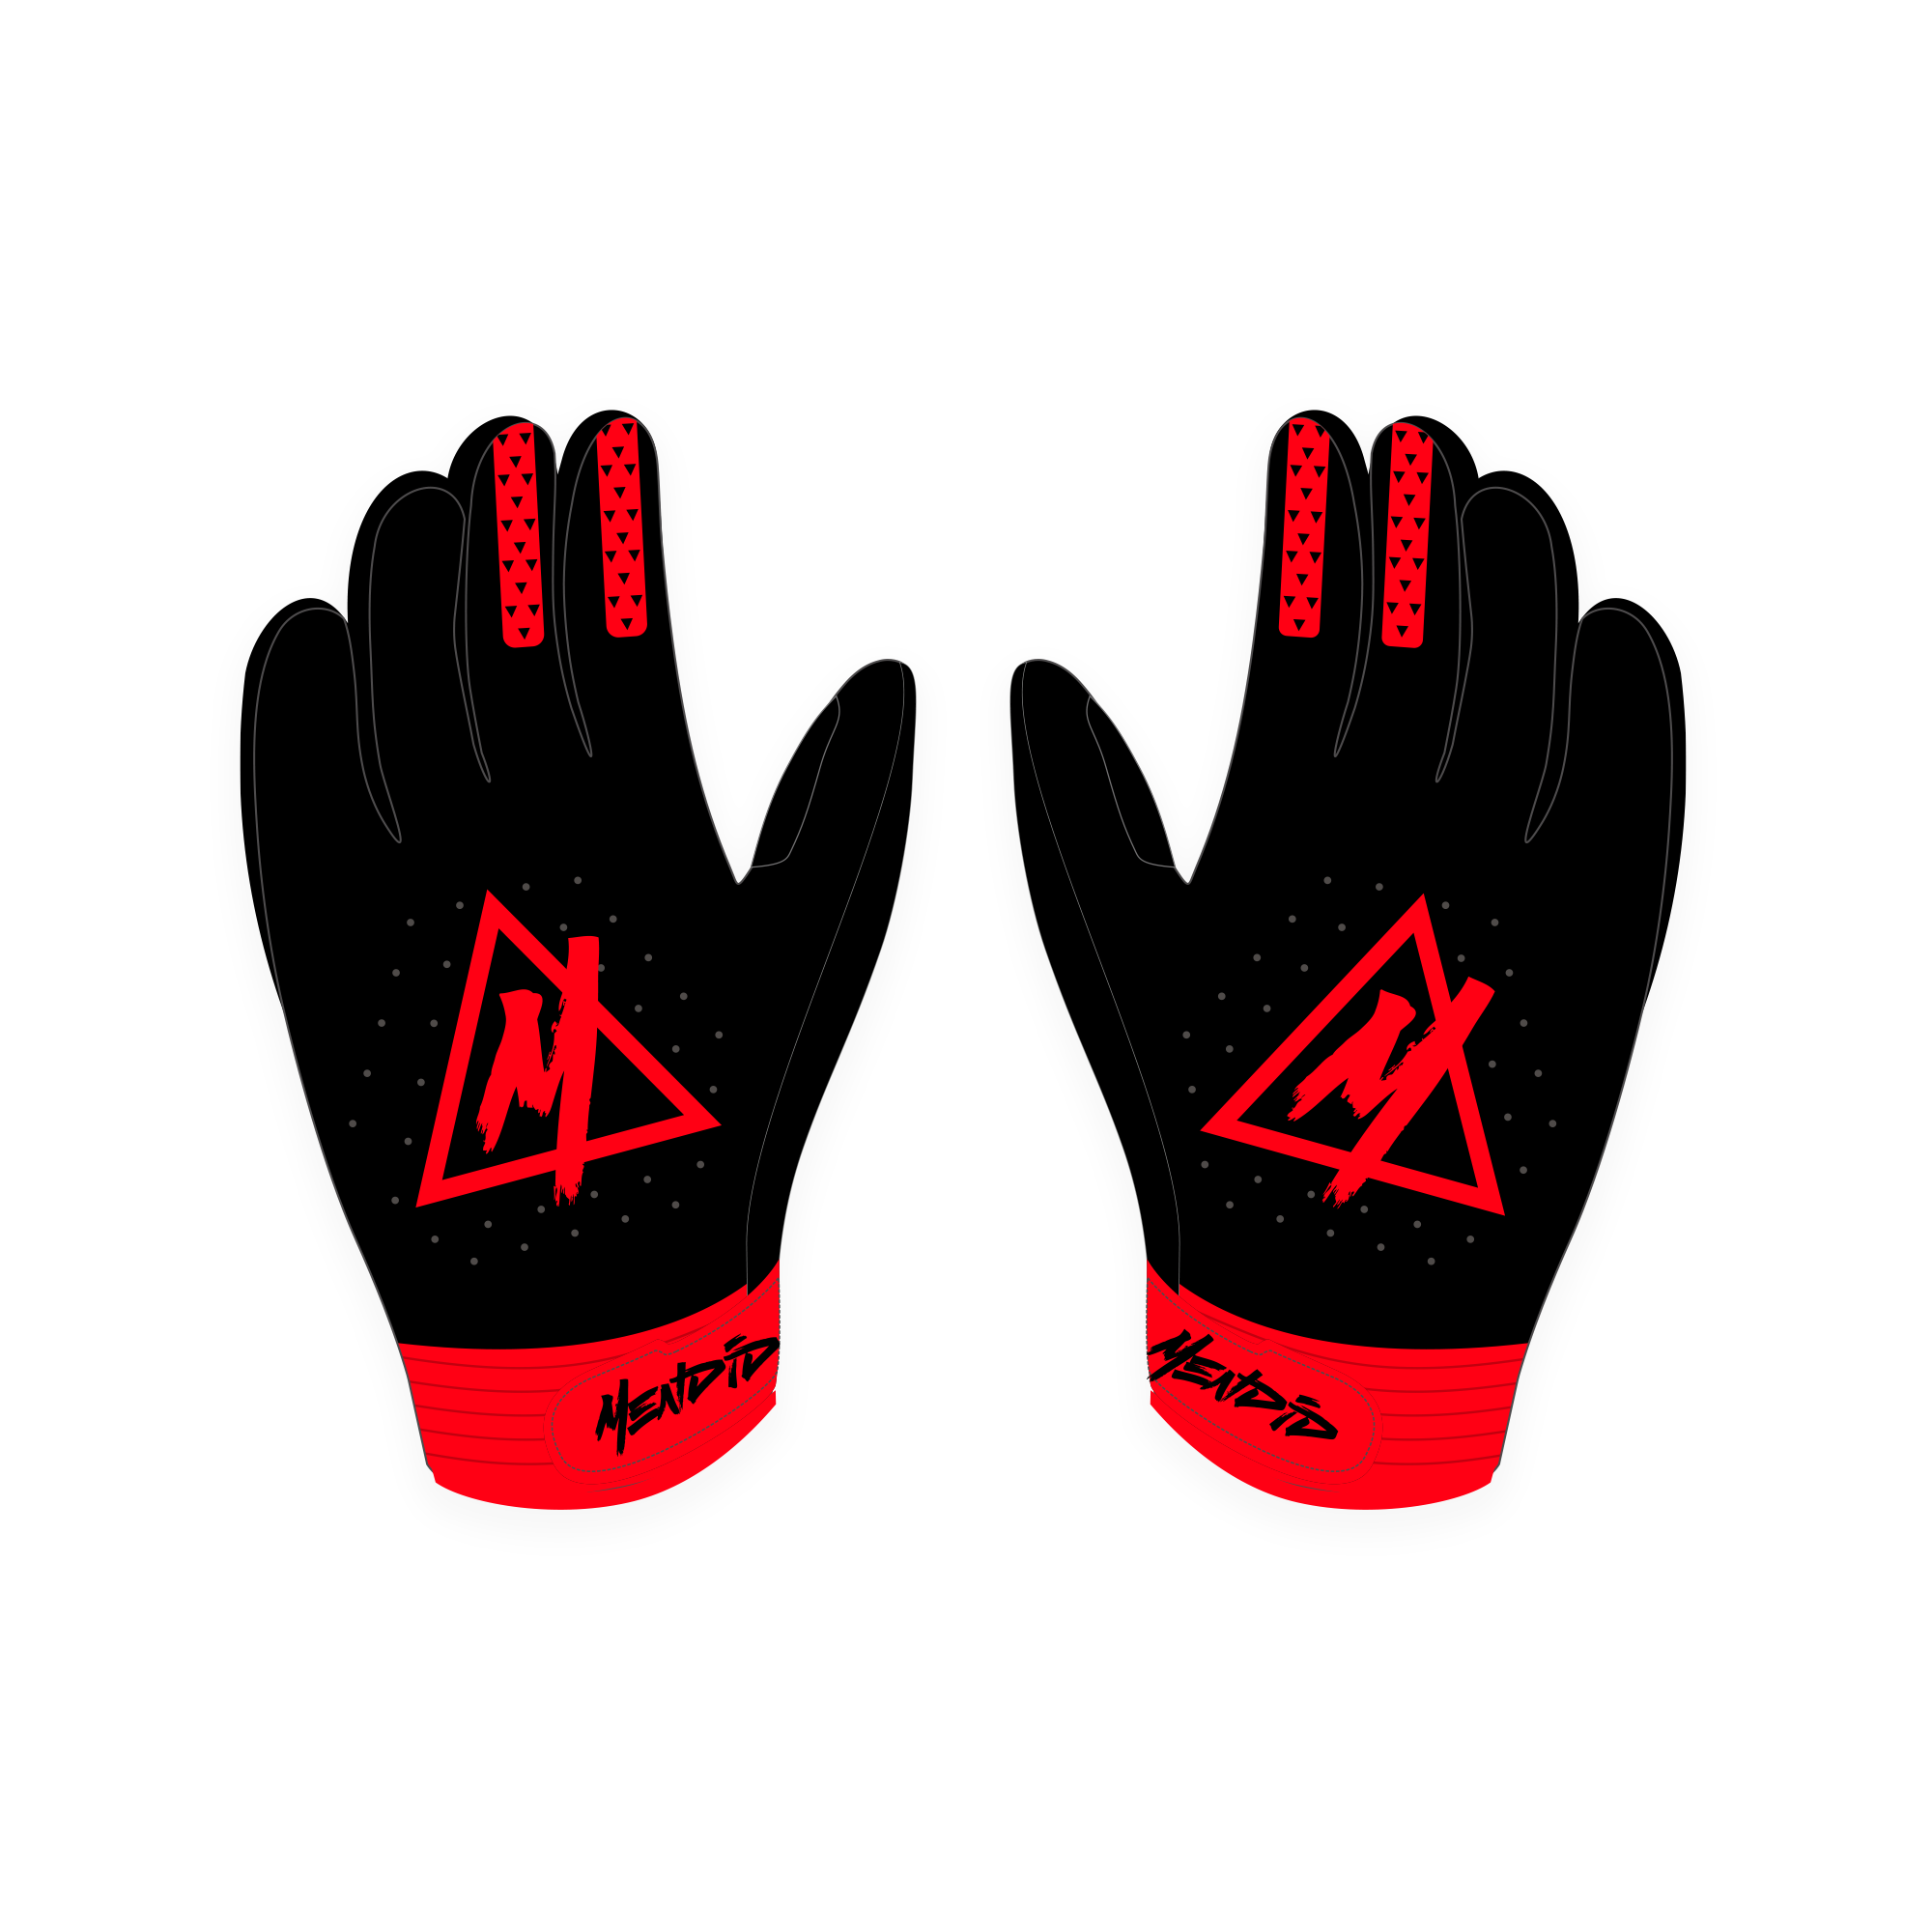 Infrared Glove